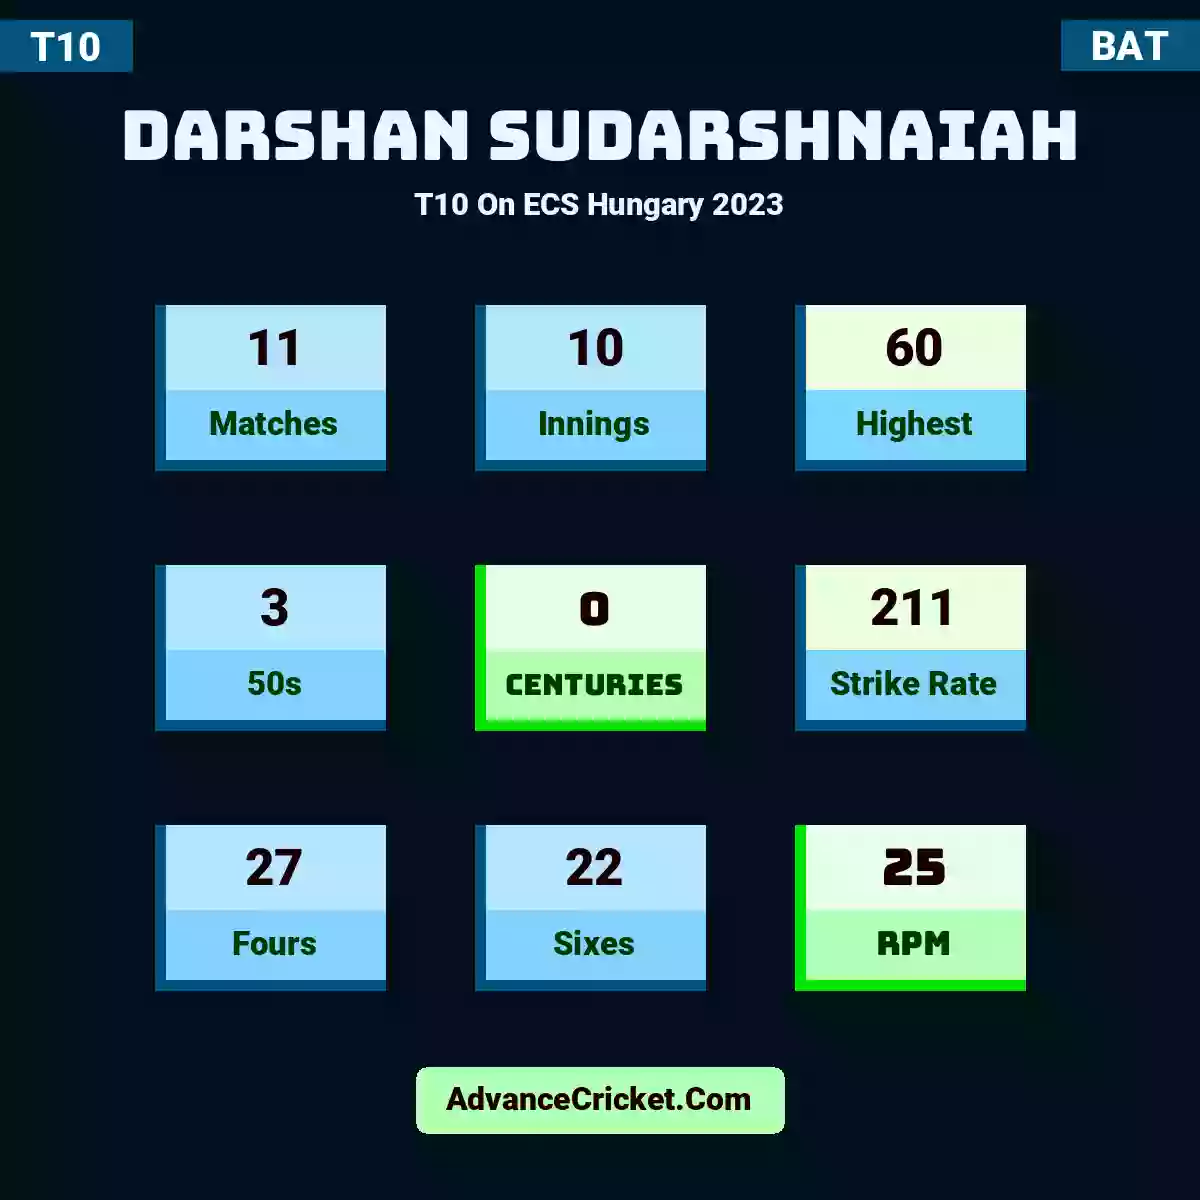 Darshan Sudarshnaiah T10  On ECS Hungary 2023, Darshan Sudarshnaiah played 11 matches, scored 60 runs as highest, 3 half-centuries, and 0 centuries, with a strike rate of 211. D.Sudarshnaiah hit 27 fours and 22 sixes, with an RPM of 25.